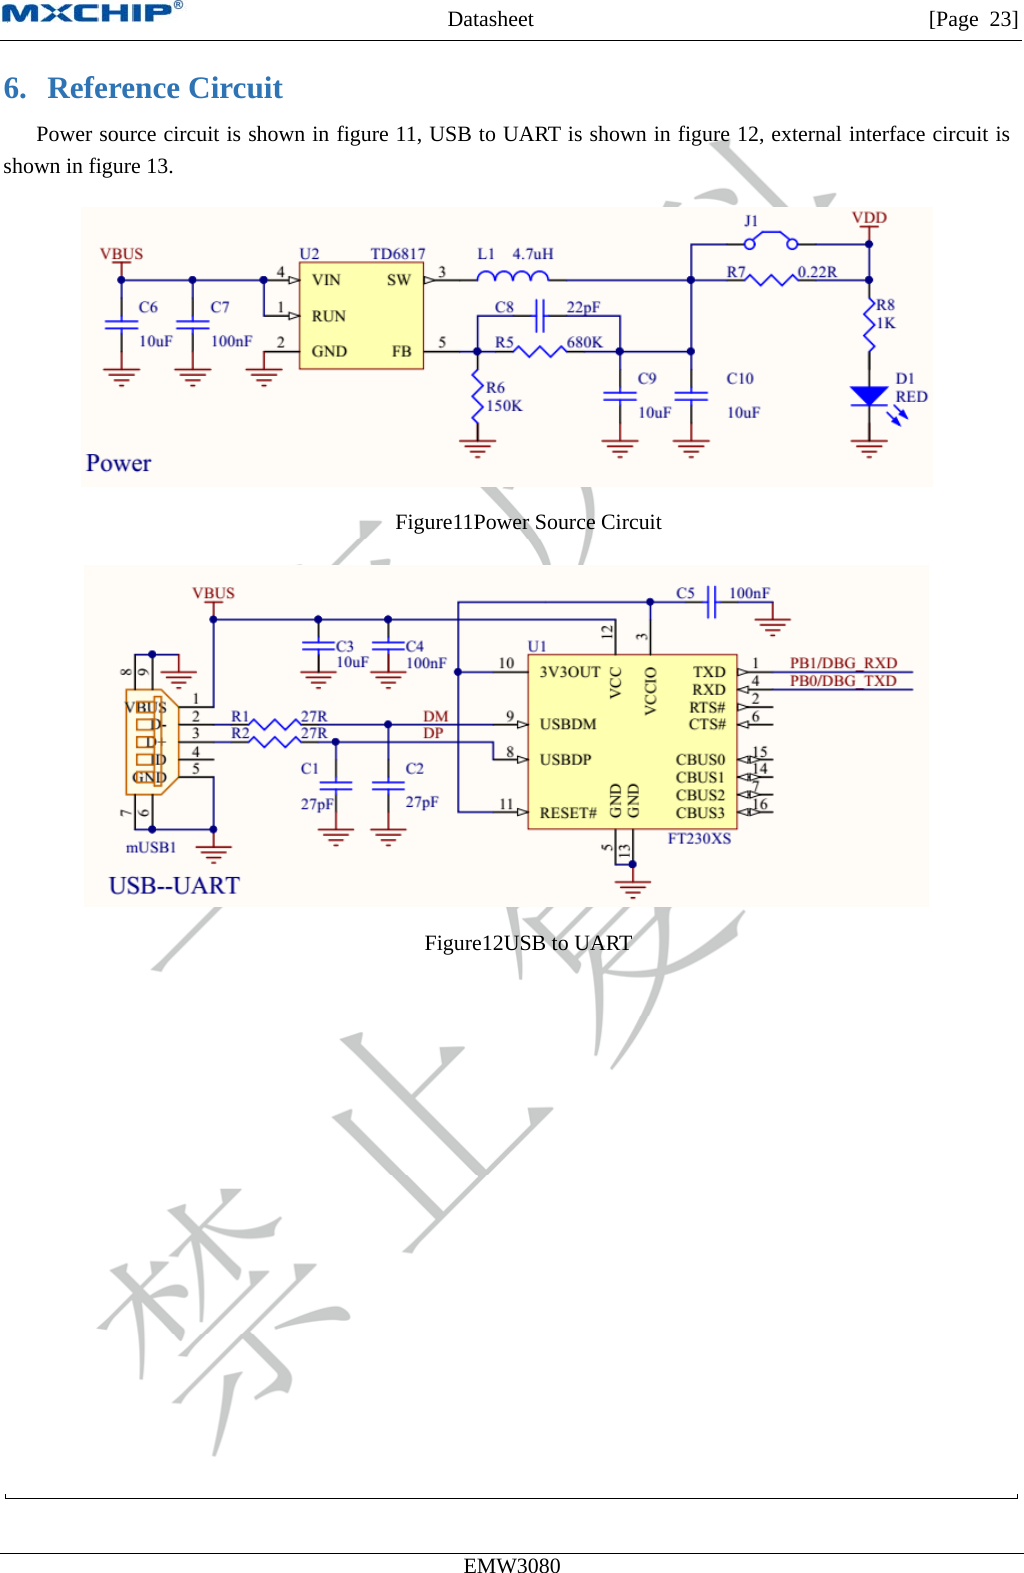 MXCHIP All Rights Reserved无法显示图像。计算机可能没有足够的内存以打开该图像，也可能是该图像已损坏。请重新启动计算机，然后重新打开该文件。如果仍然显示红色“x”，则可能需要删除该图像，然后重新将其插入。Datasheet         [Page 23] EMW3080  6. Reference Circuit Power source circuit is shown in figure 11, USB to UART is shown in figure 12, external interface circuit is shown in figure 13.  Figure11Power Source Circuit  Figure12USB to UART  